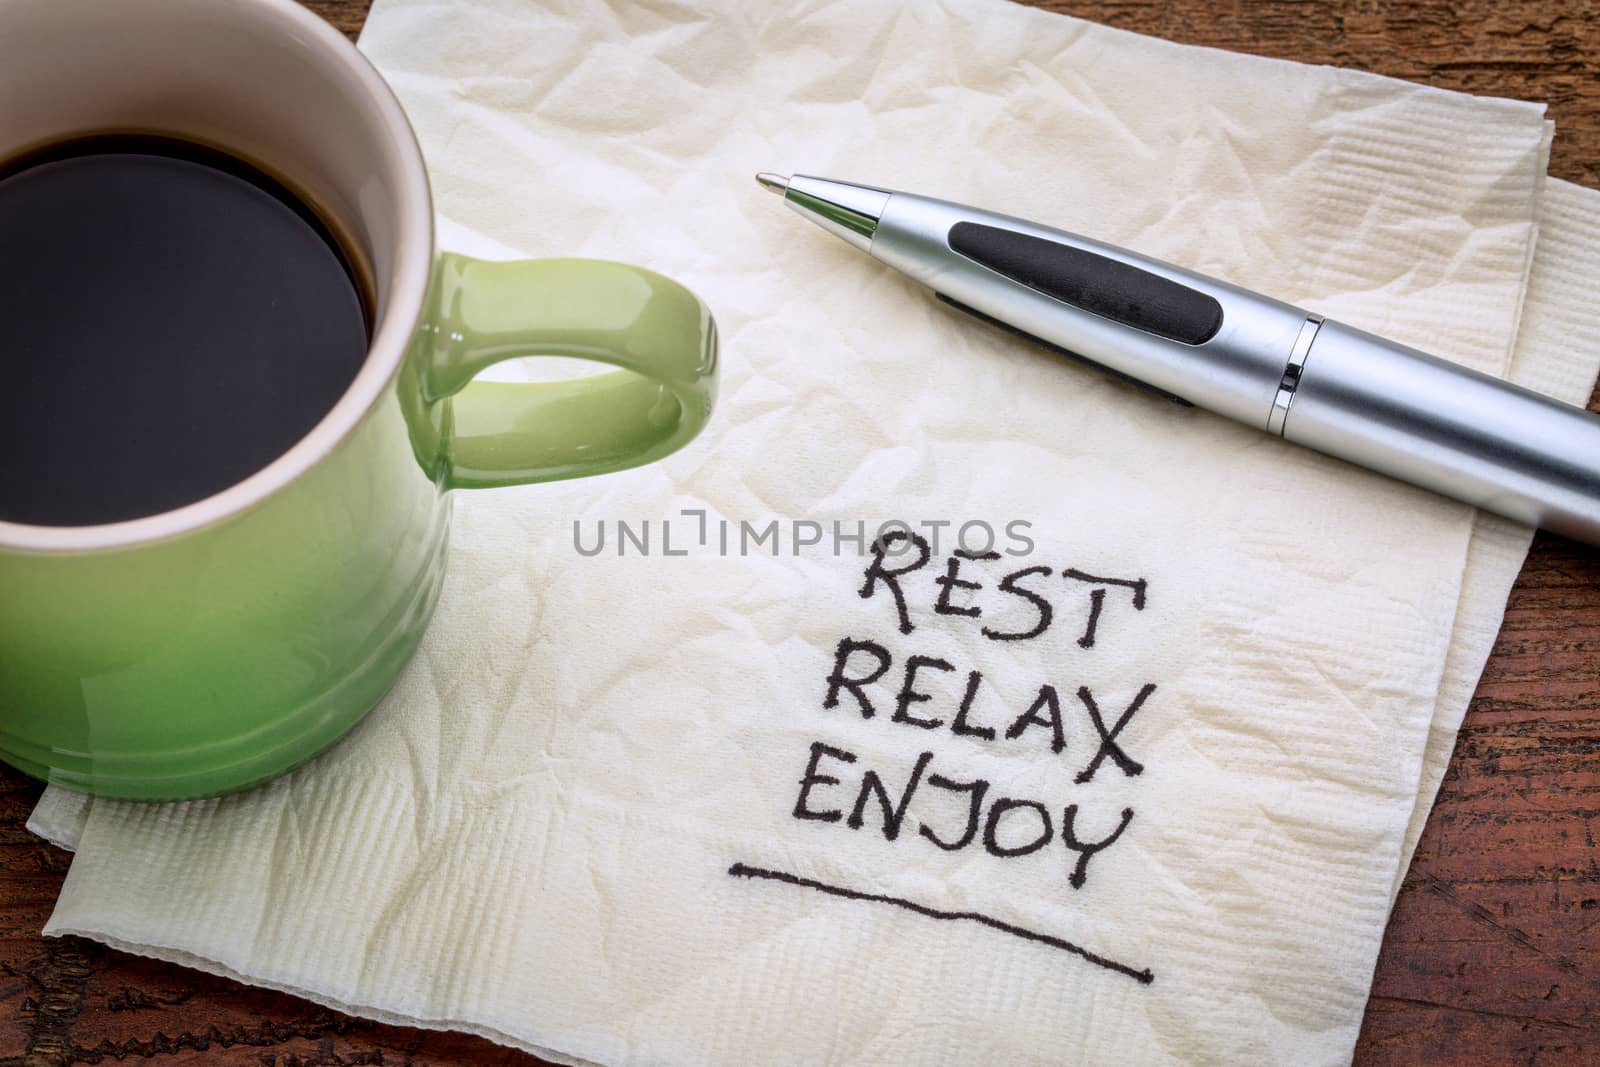 rest, relax, enjoy on napkin by PixelsAway